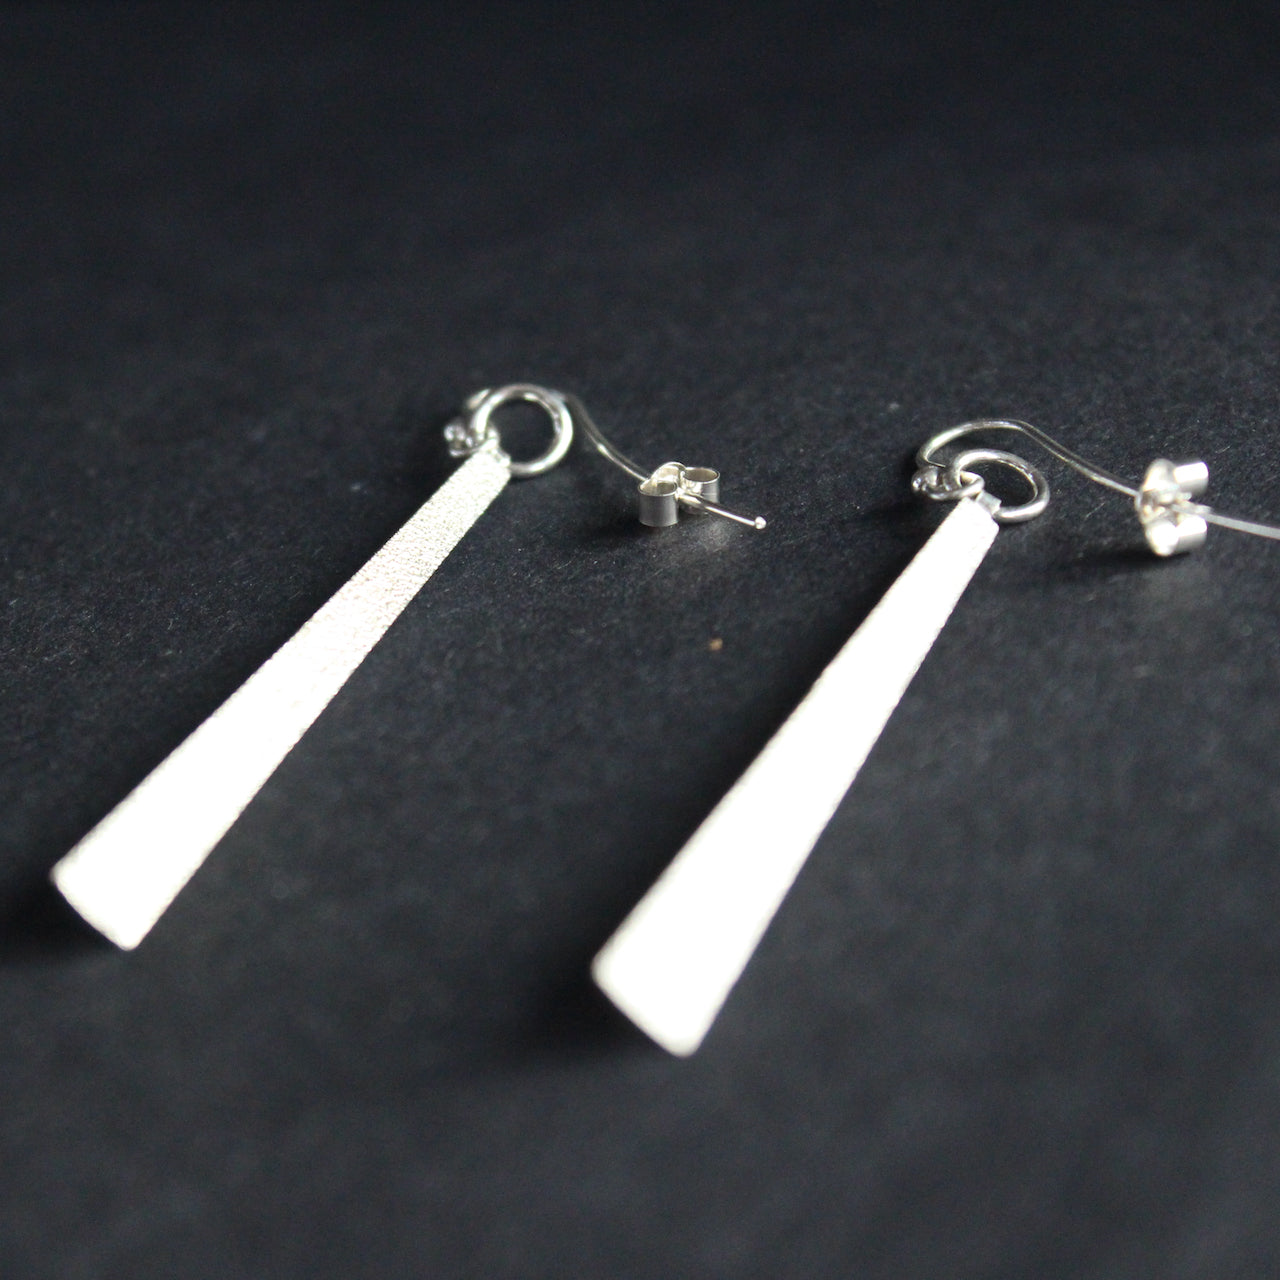 a pair of long silver earrings  by UK jeweller beverly bartlett.